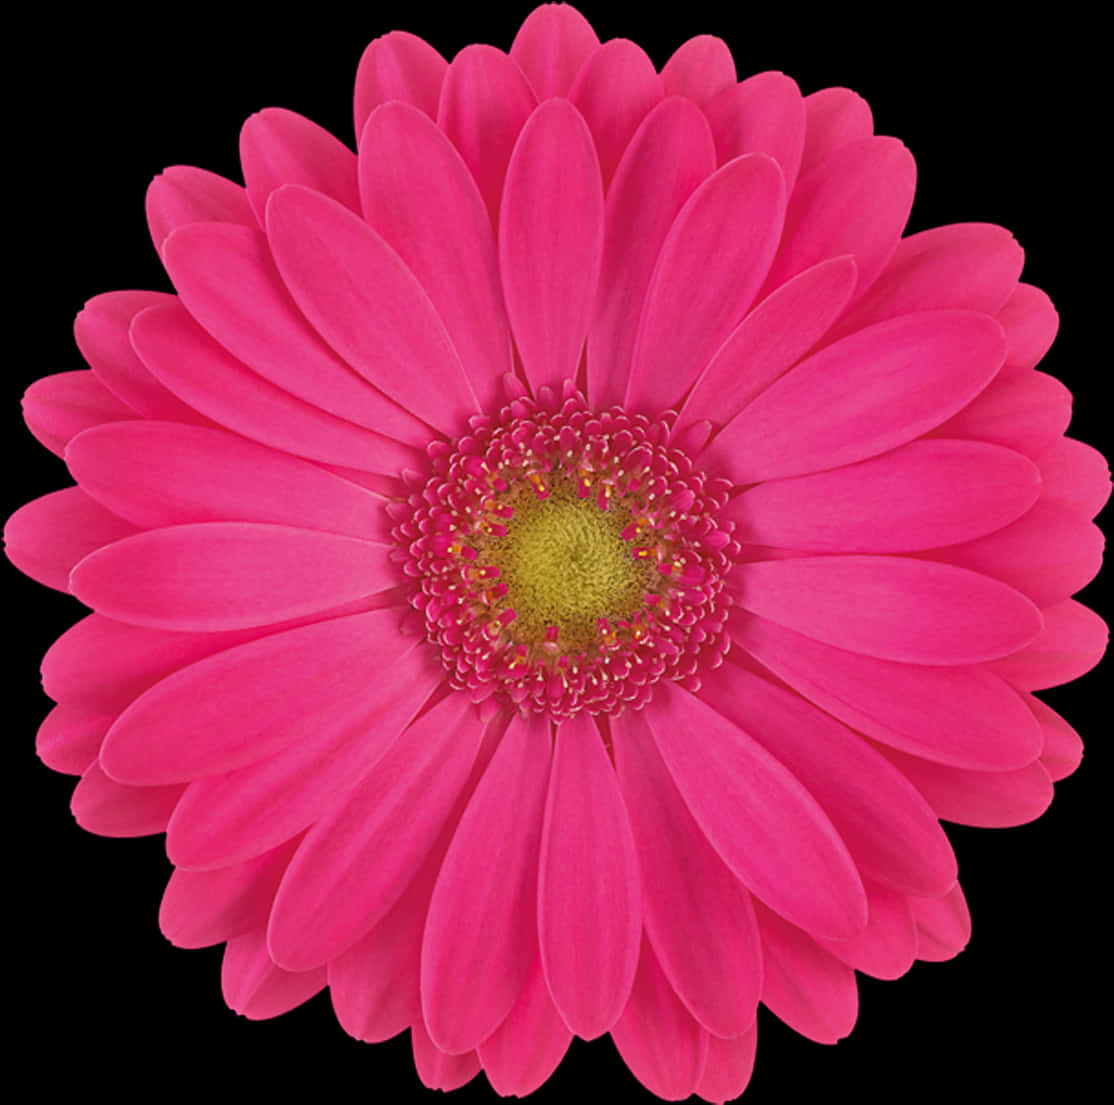 Vibrant Pink Gerbera Daisy Black Background PNG